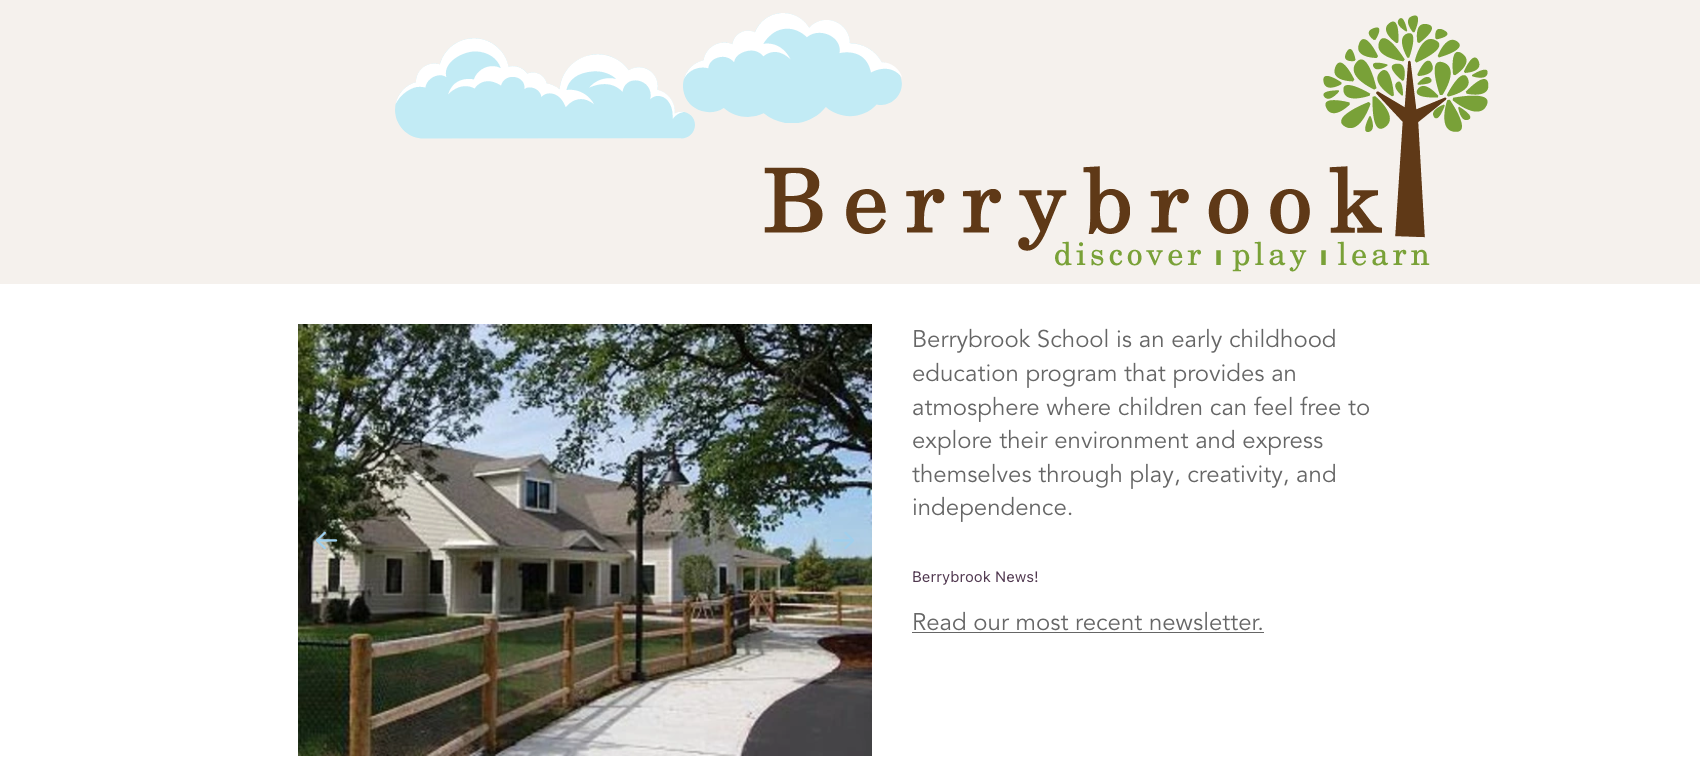 Berrybrook School